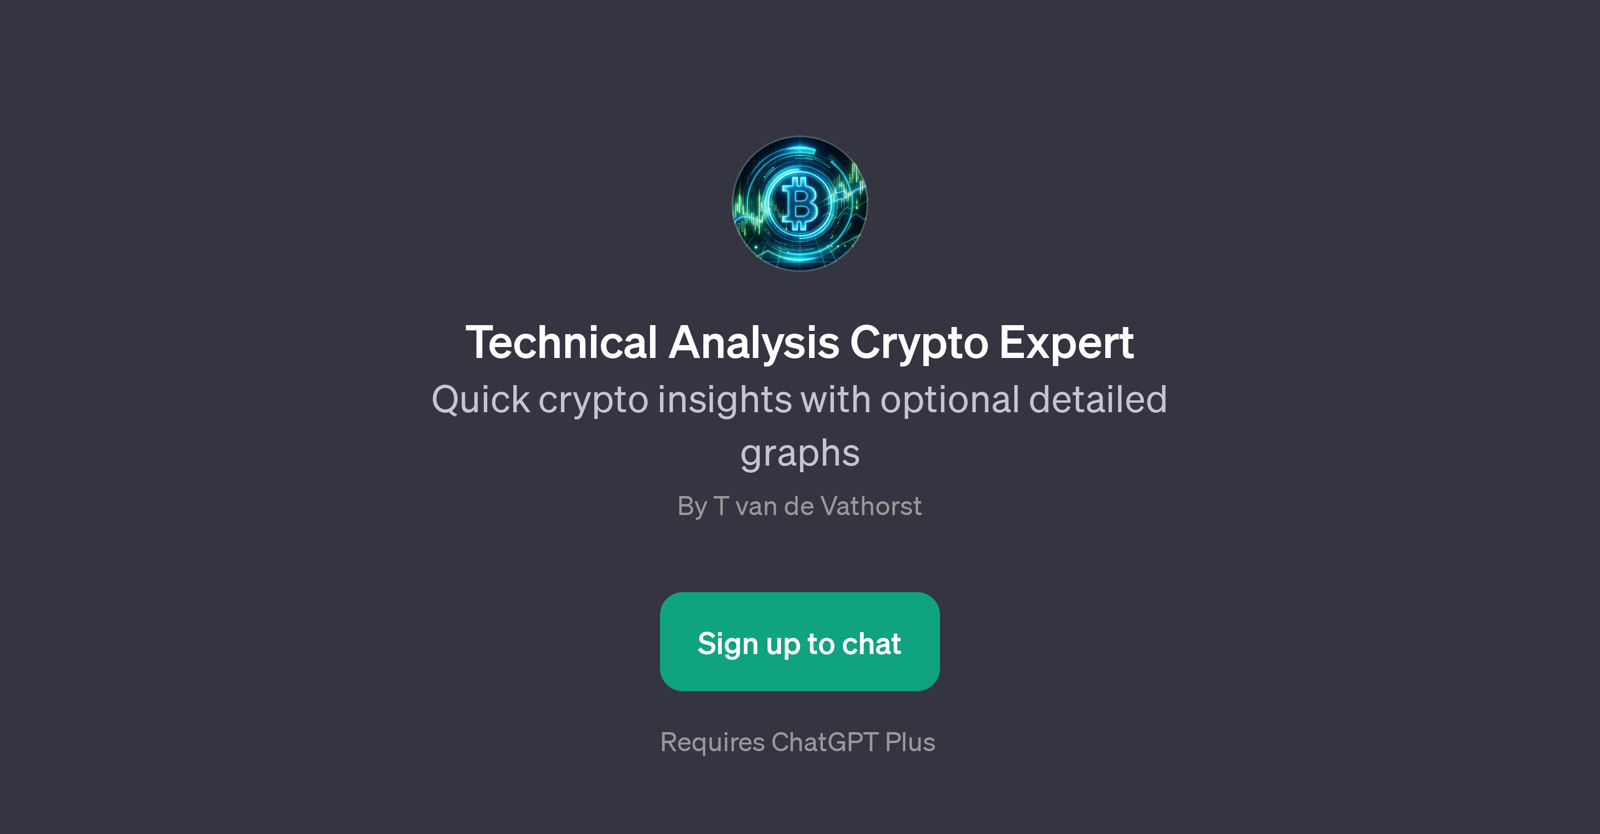 Technical Analysis Crypto Expert website